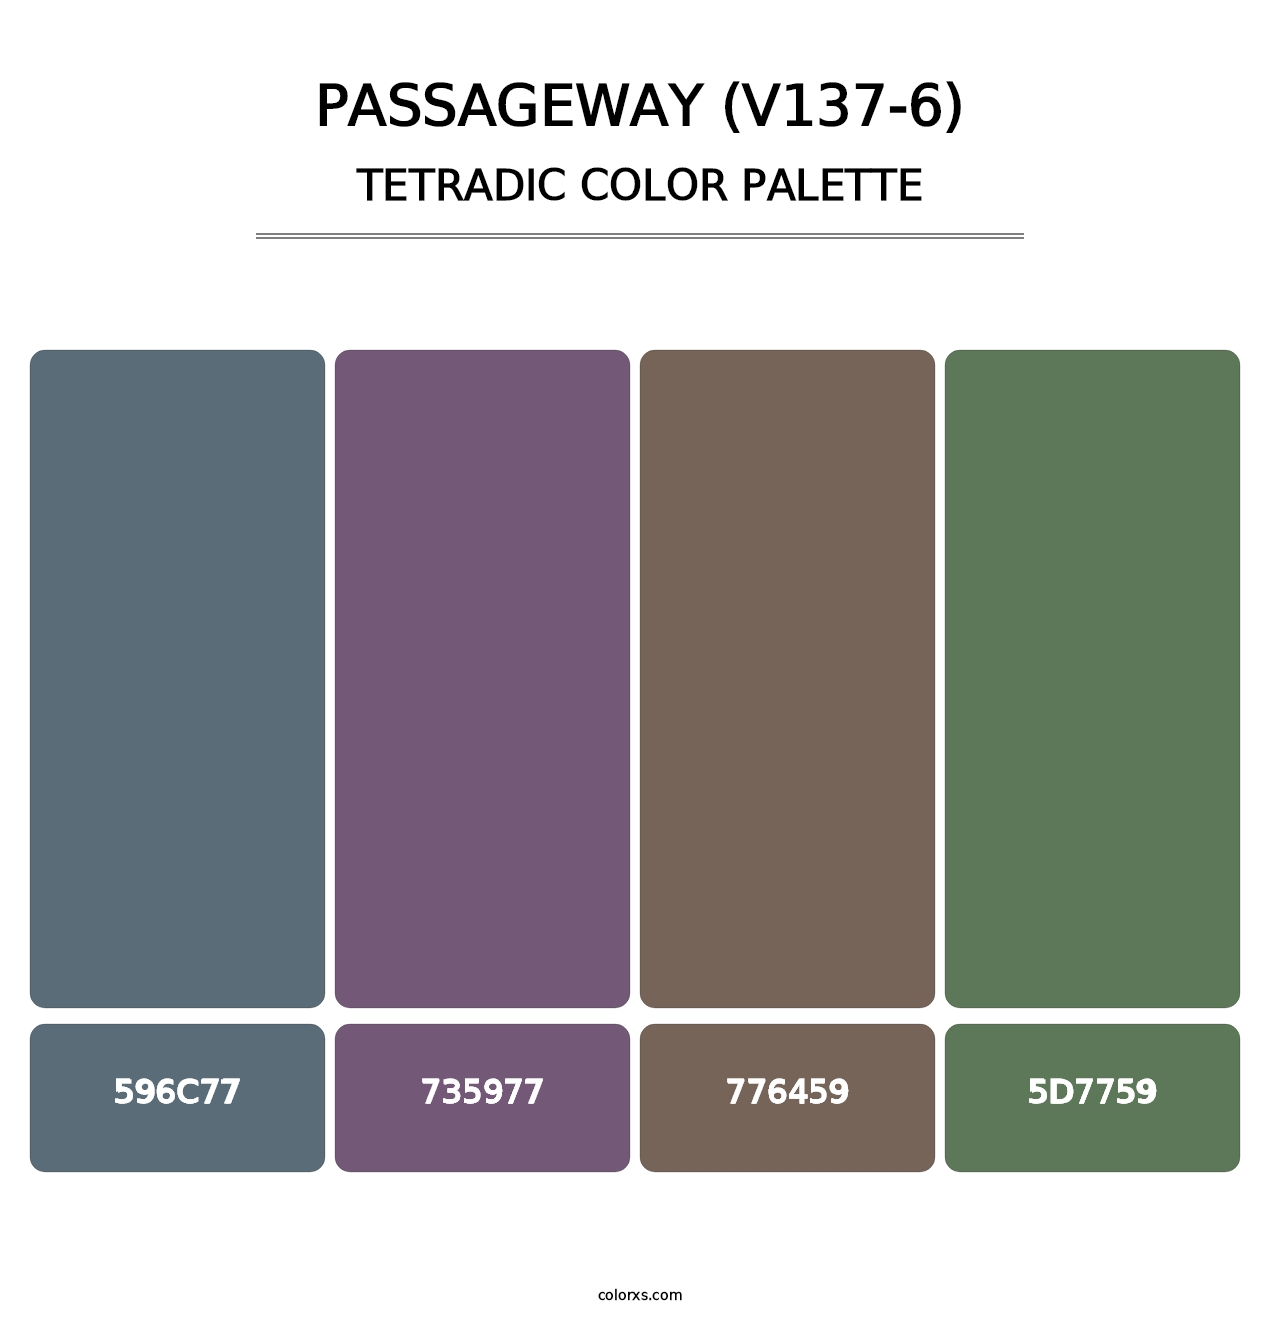 Passageway (V137-6) - Tetradic Color Palette